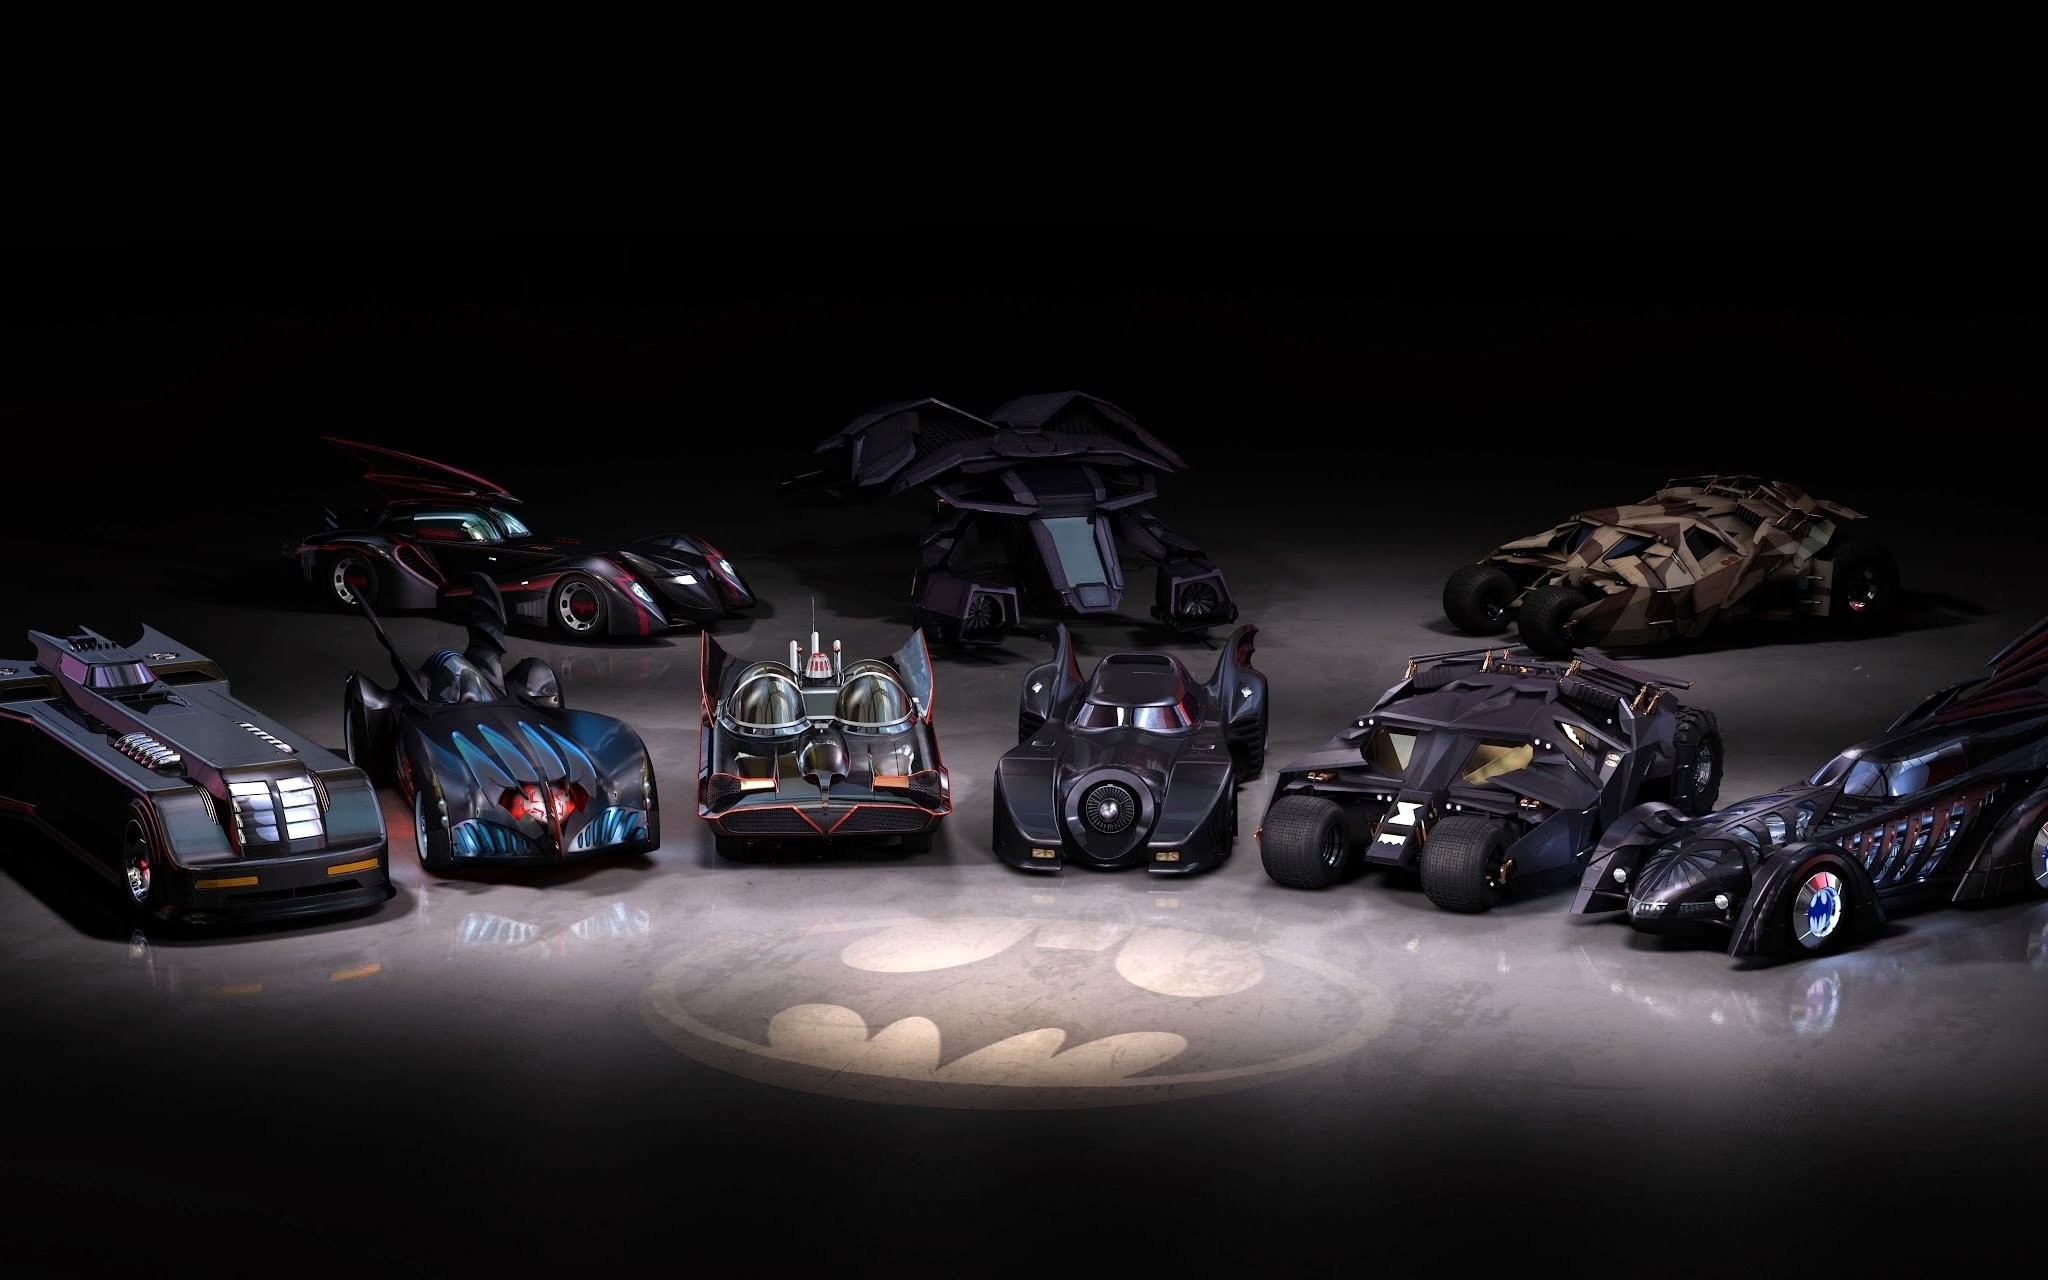 Batman Batmobile Batman Begins Bat Signal Car Supercars Digital Art 2048x1280